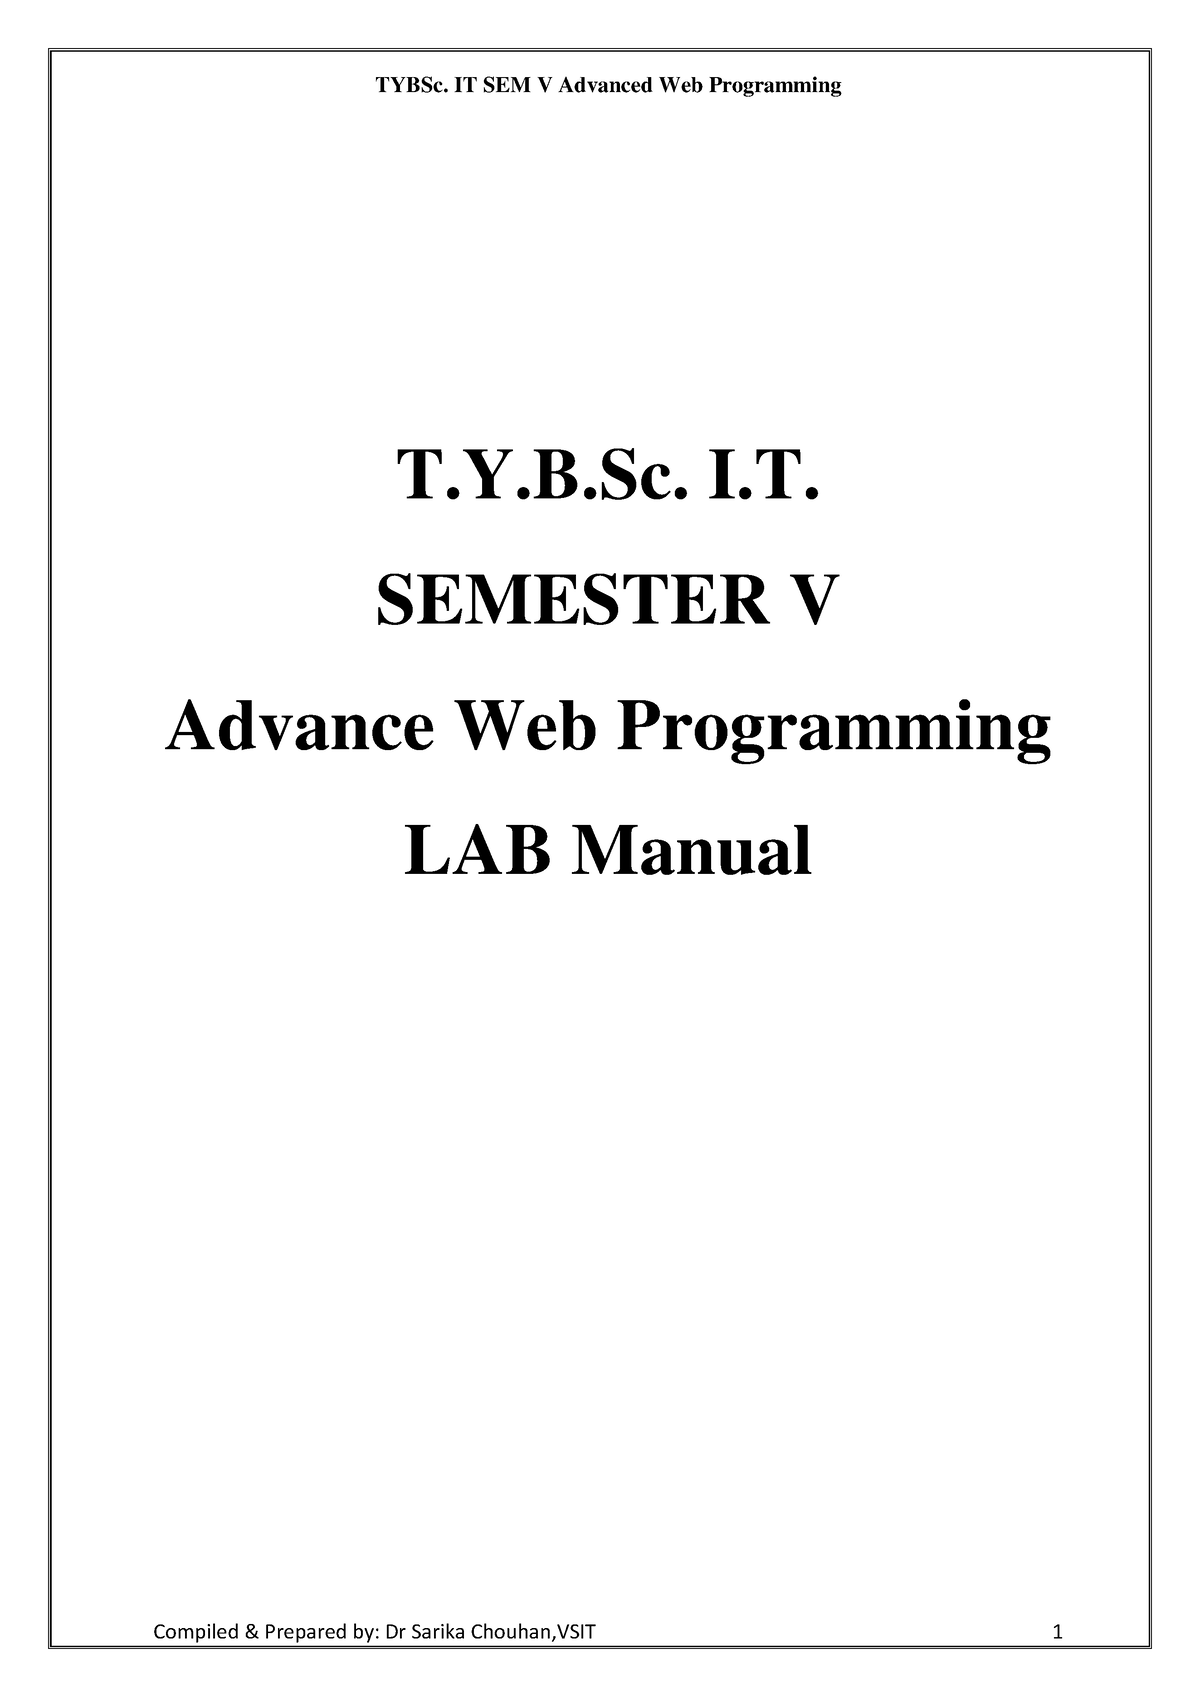 TYBSc IT Sem V AWP Lab Manual 2022-23 - T.Y.B. I. SEMESTER V Advance ...